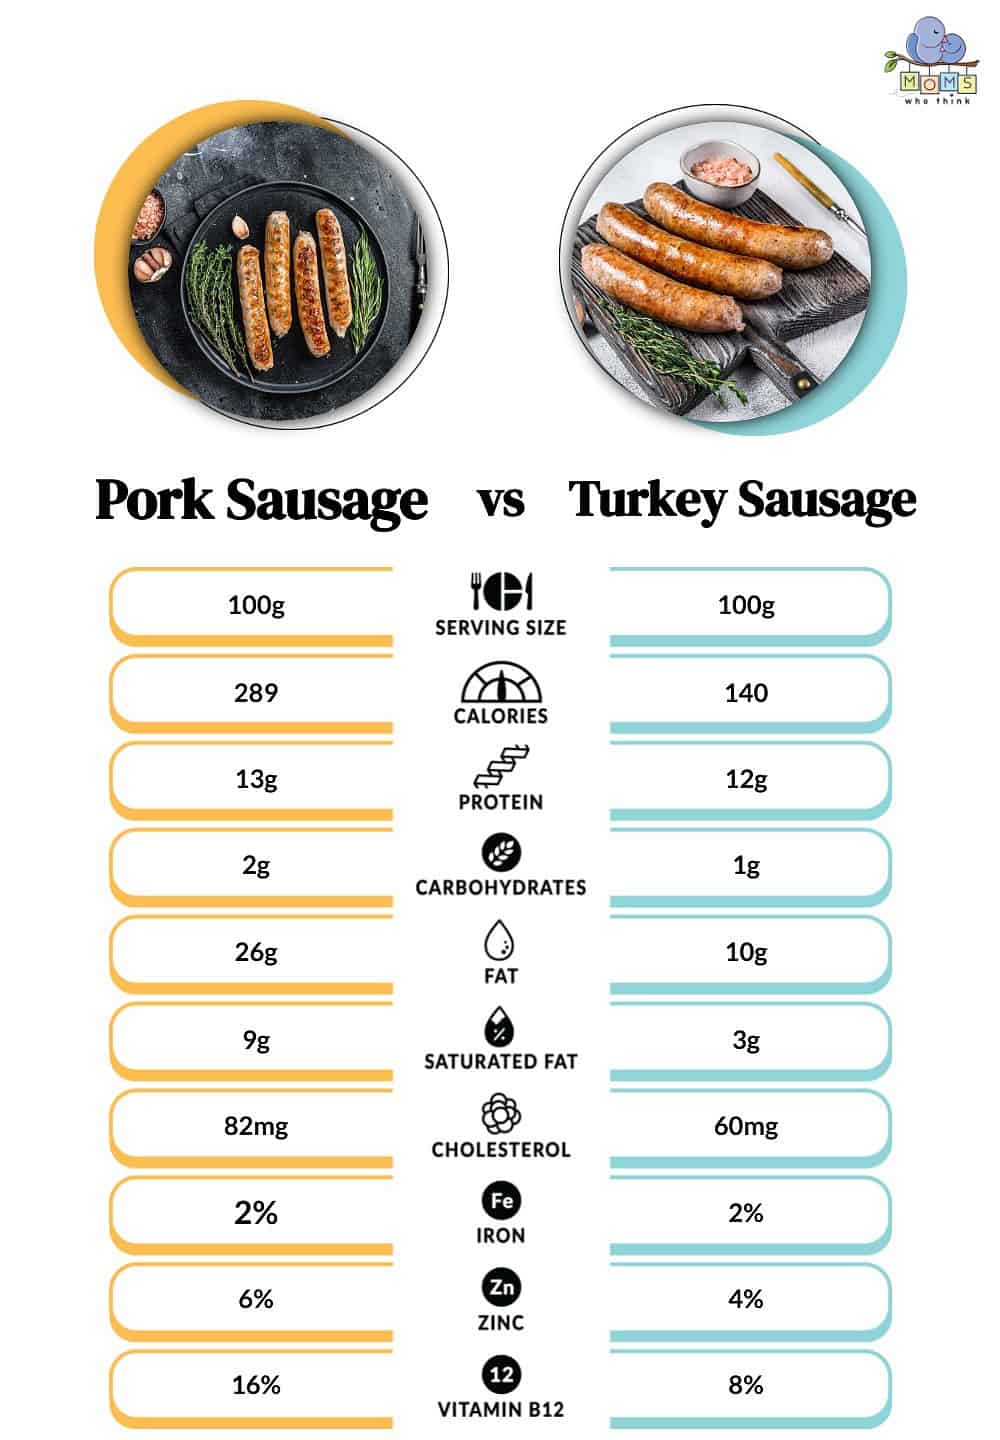 Pork Sausage vs Turkey Sausage Nutritional Facts